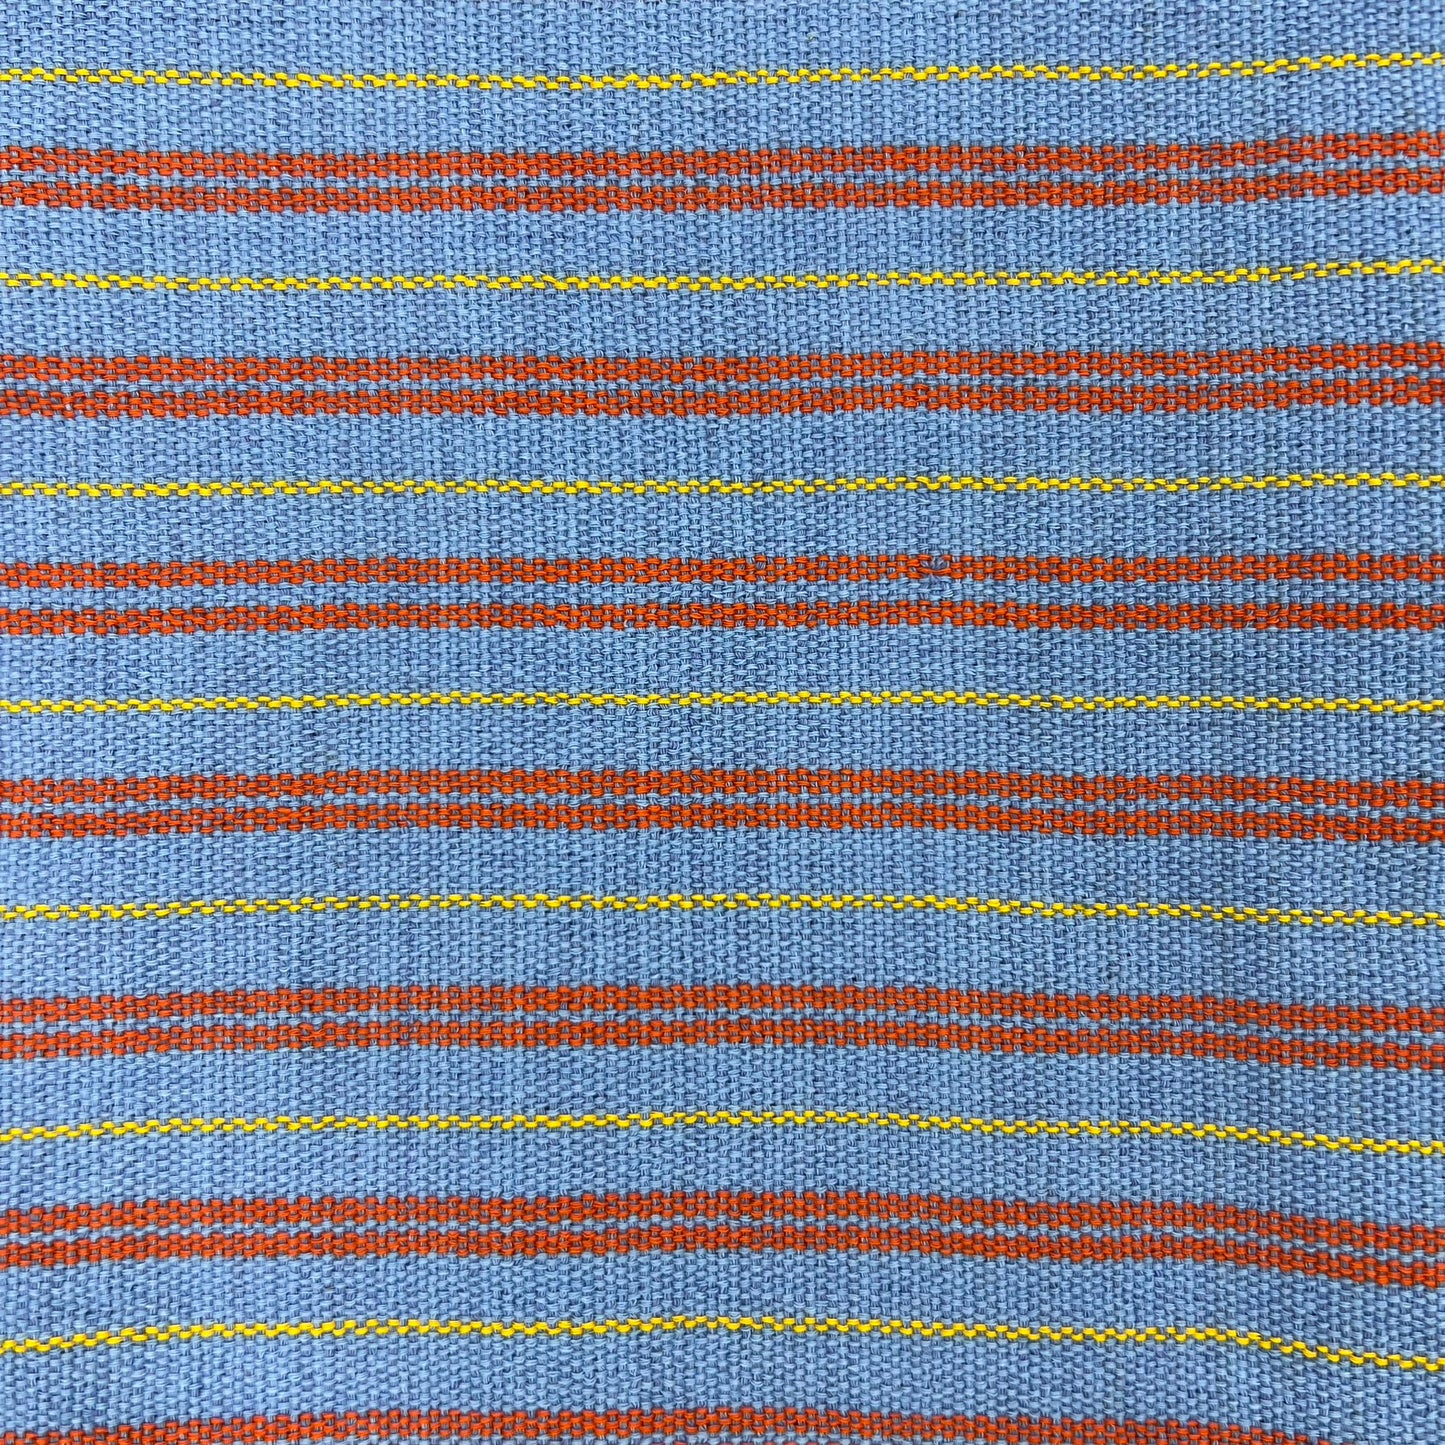 Blue Pin Striped Filipino Handwoven Blanket